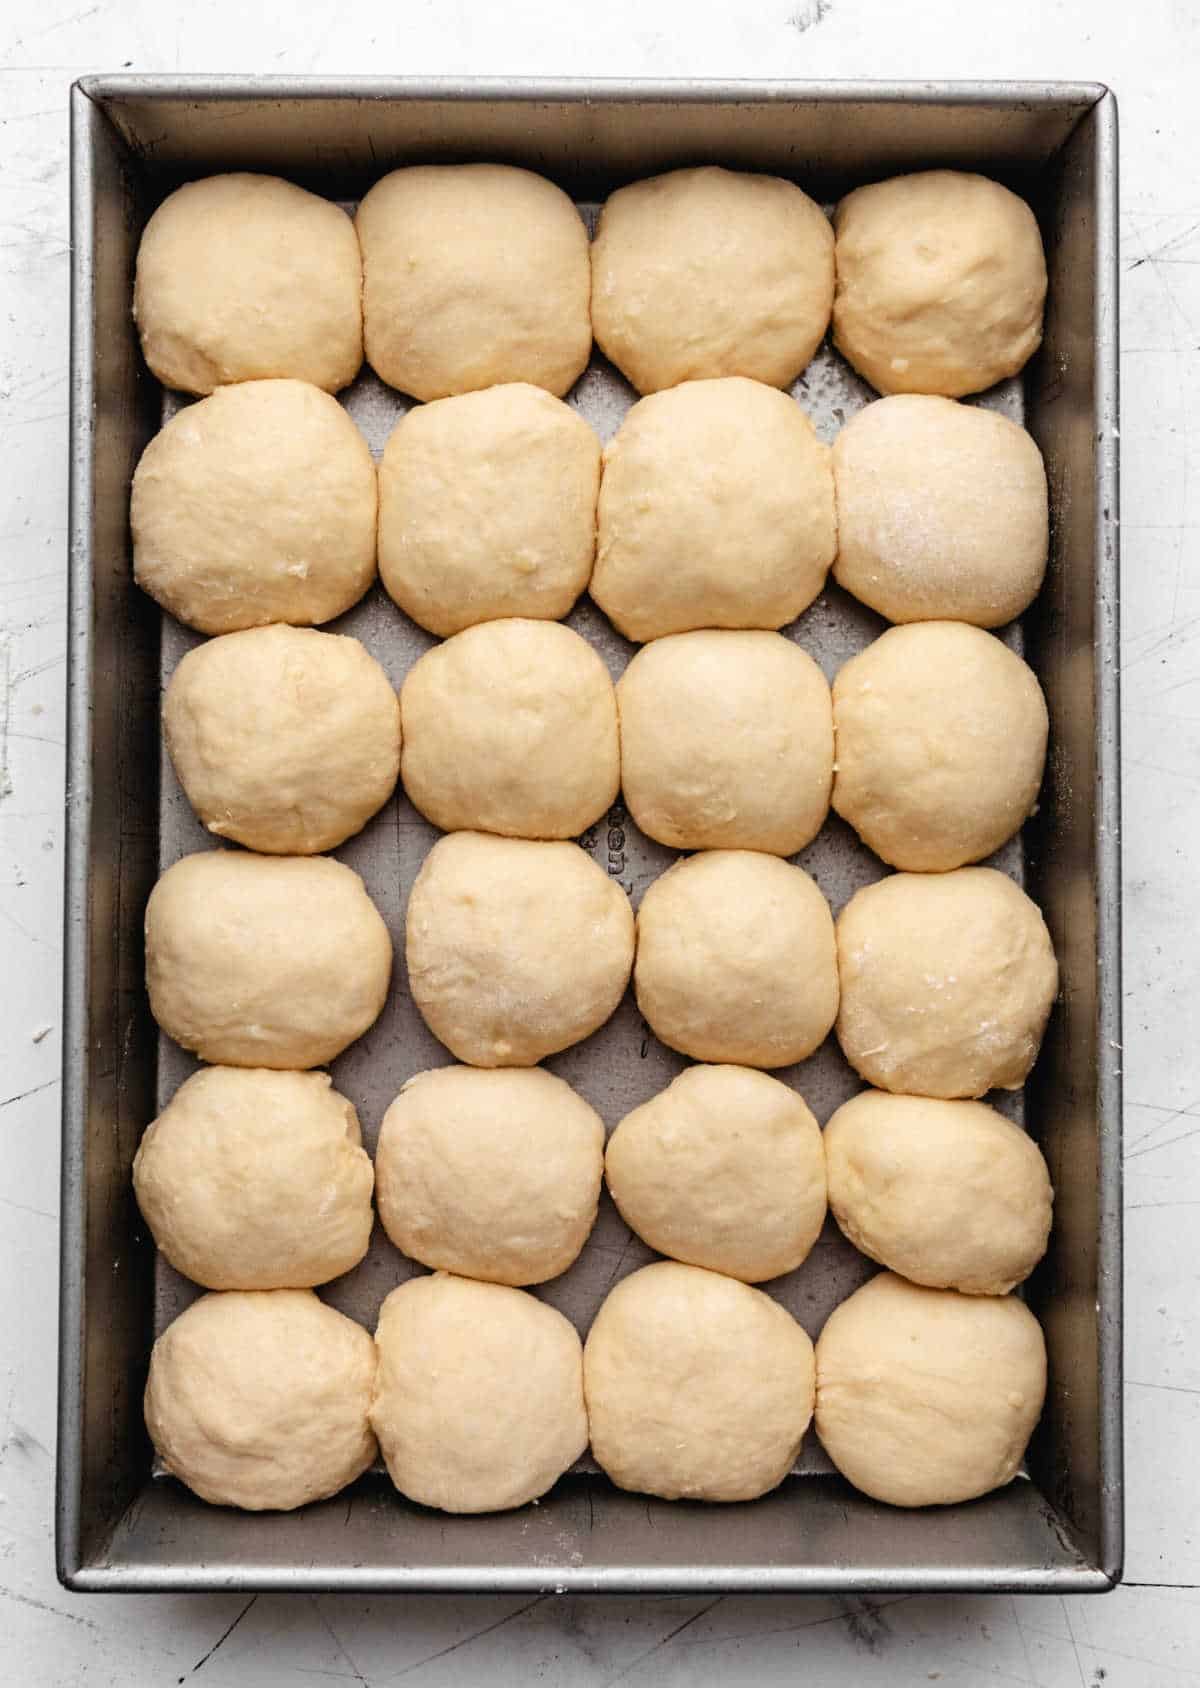 Potato roll dough in a silver baking pan.